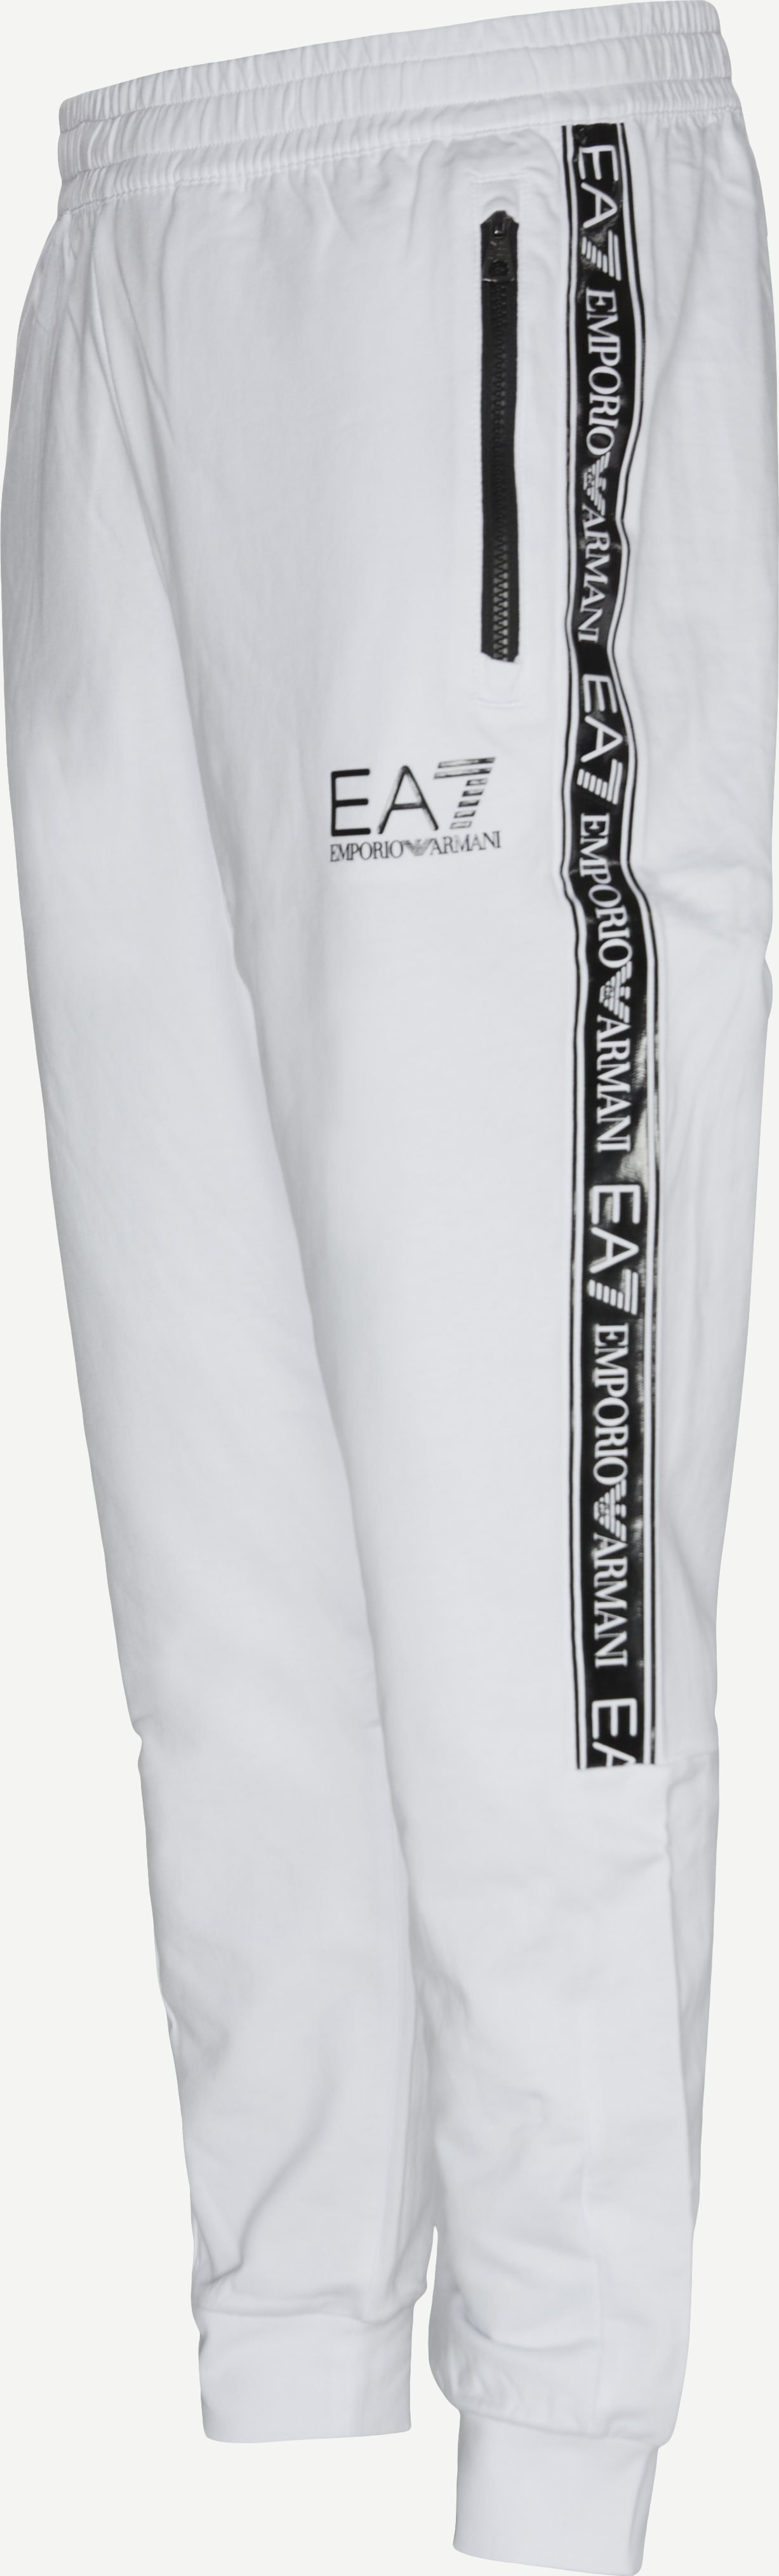 PJ05Z Sweatpant - Trousers - Regular fit - White